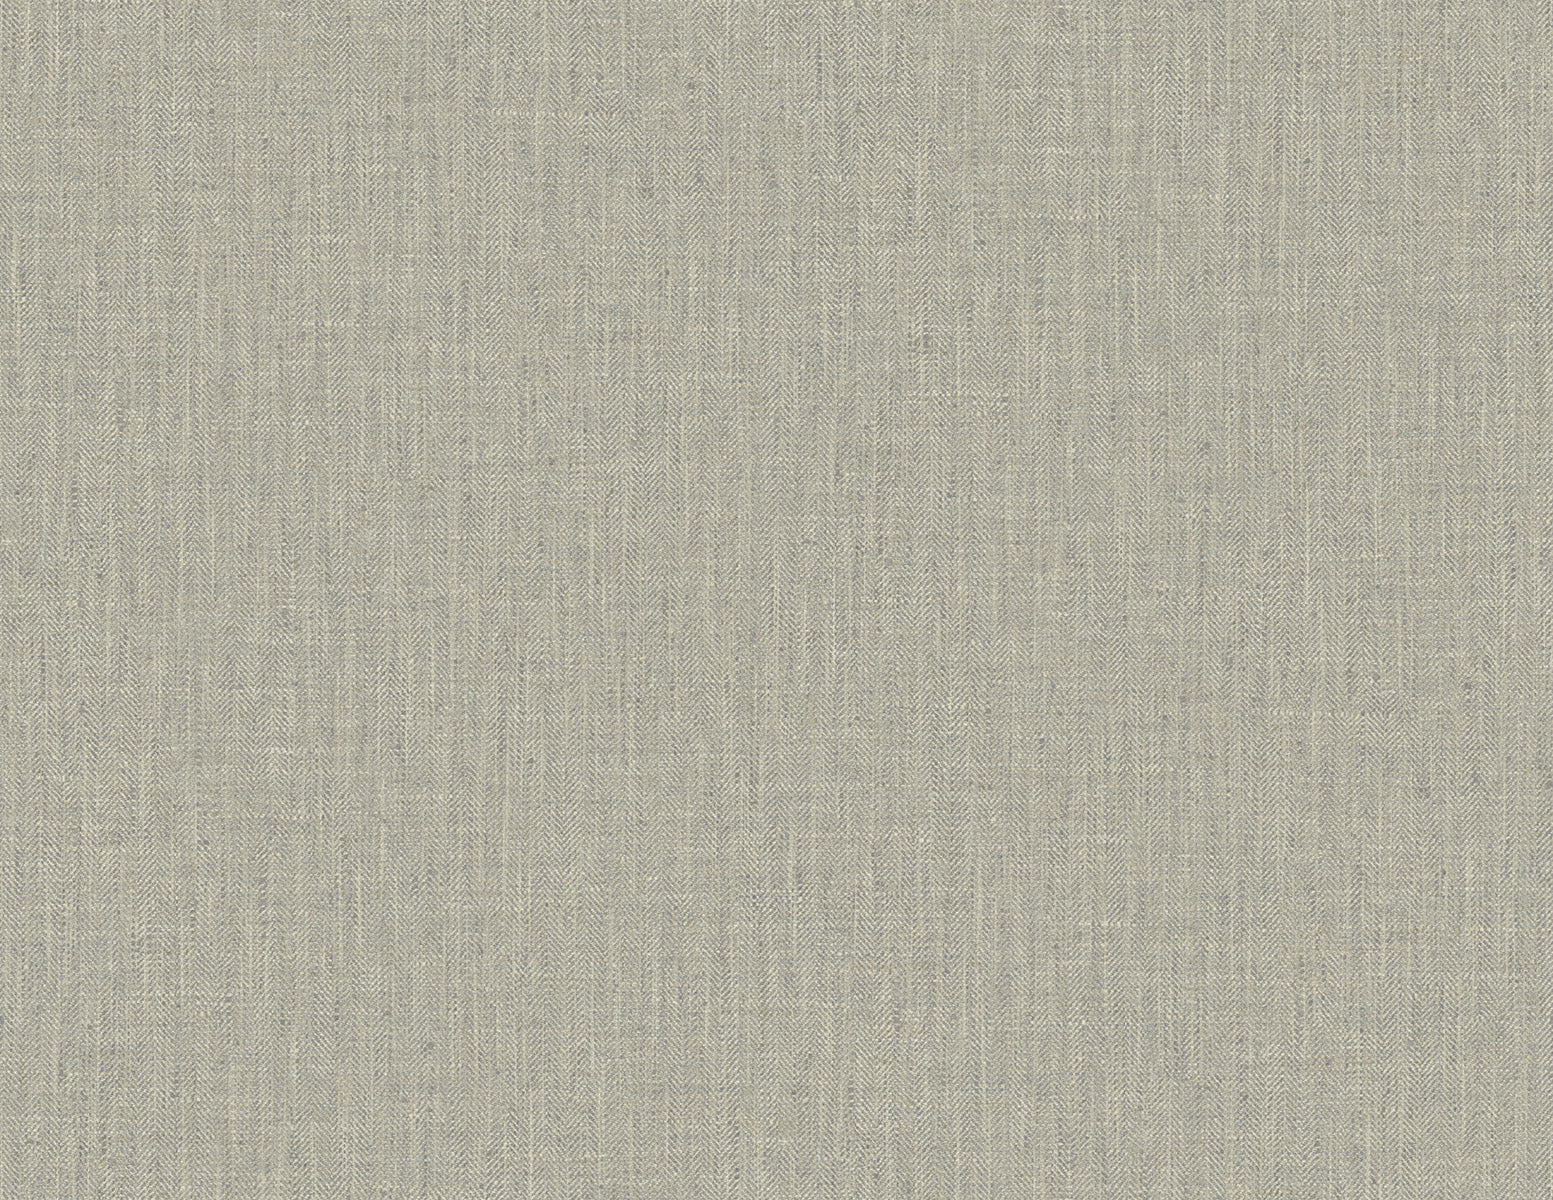 DuPont TG60047 Tedlar Textures Tweed Embossed Vinyl  Wallpaper Warm Clove